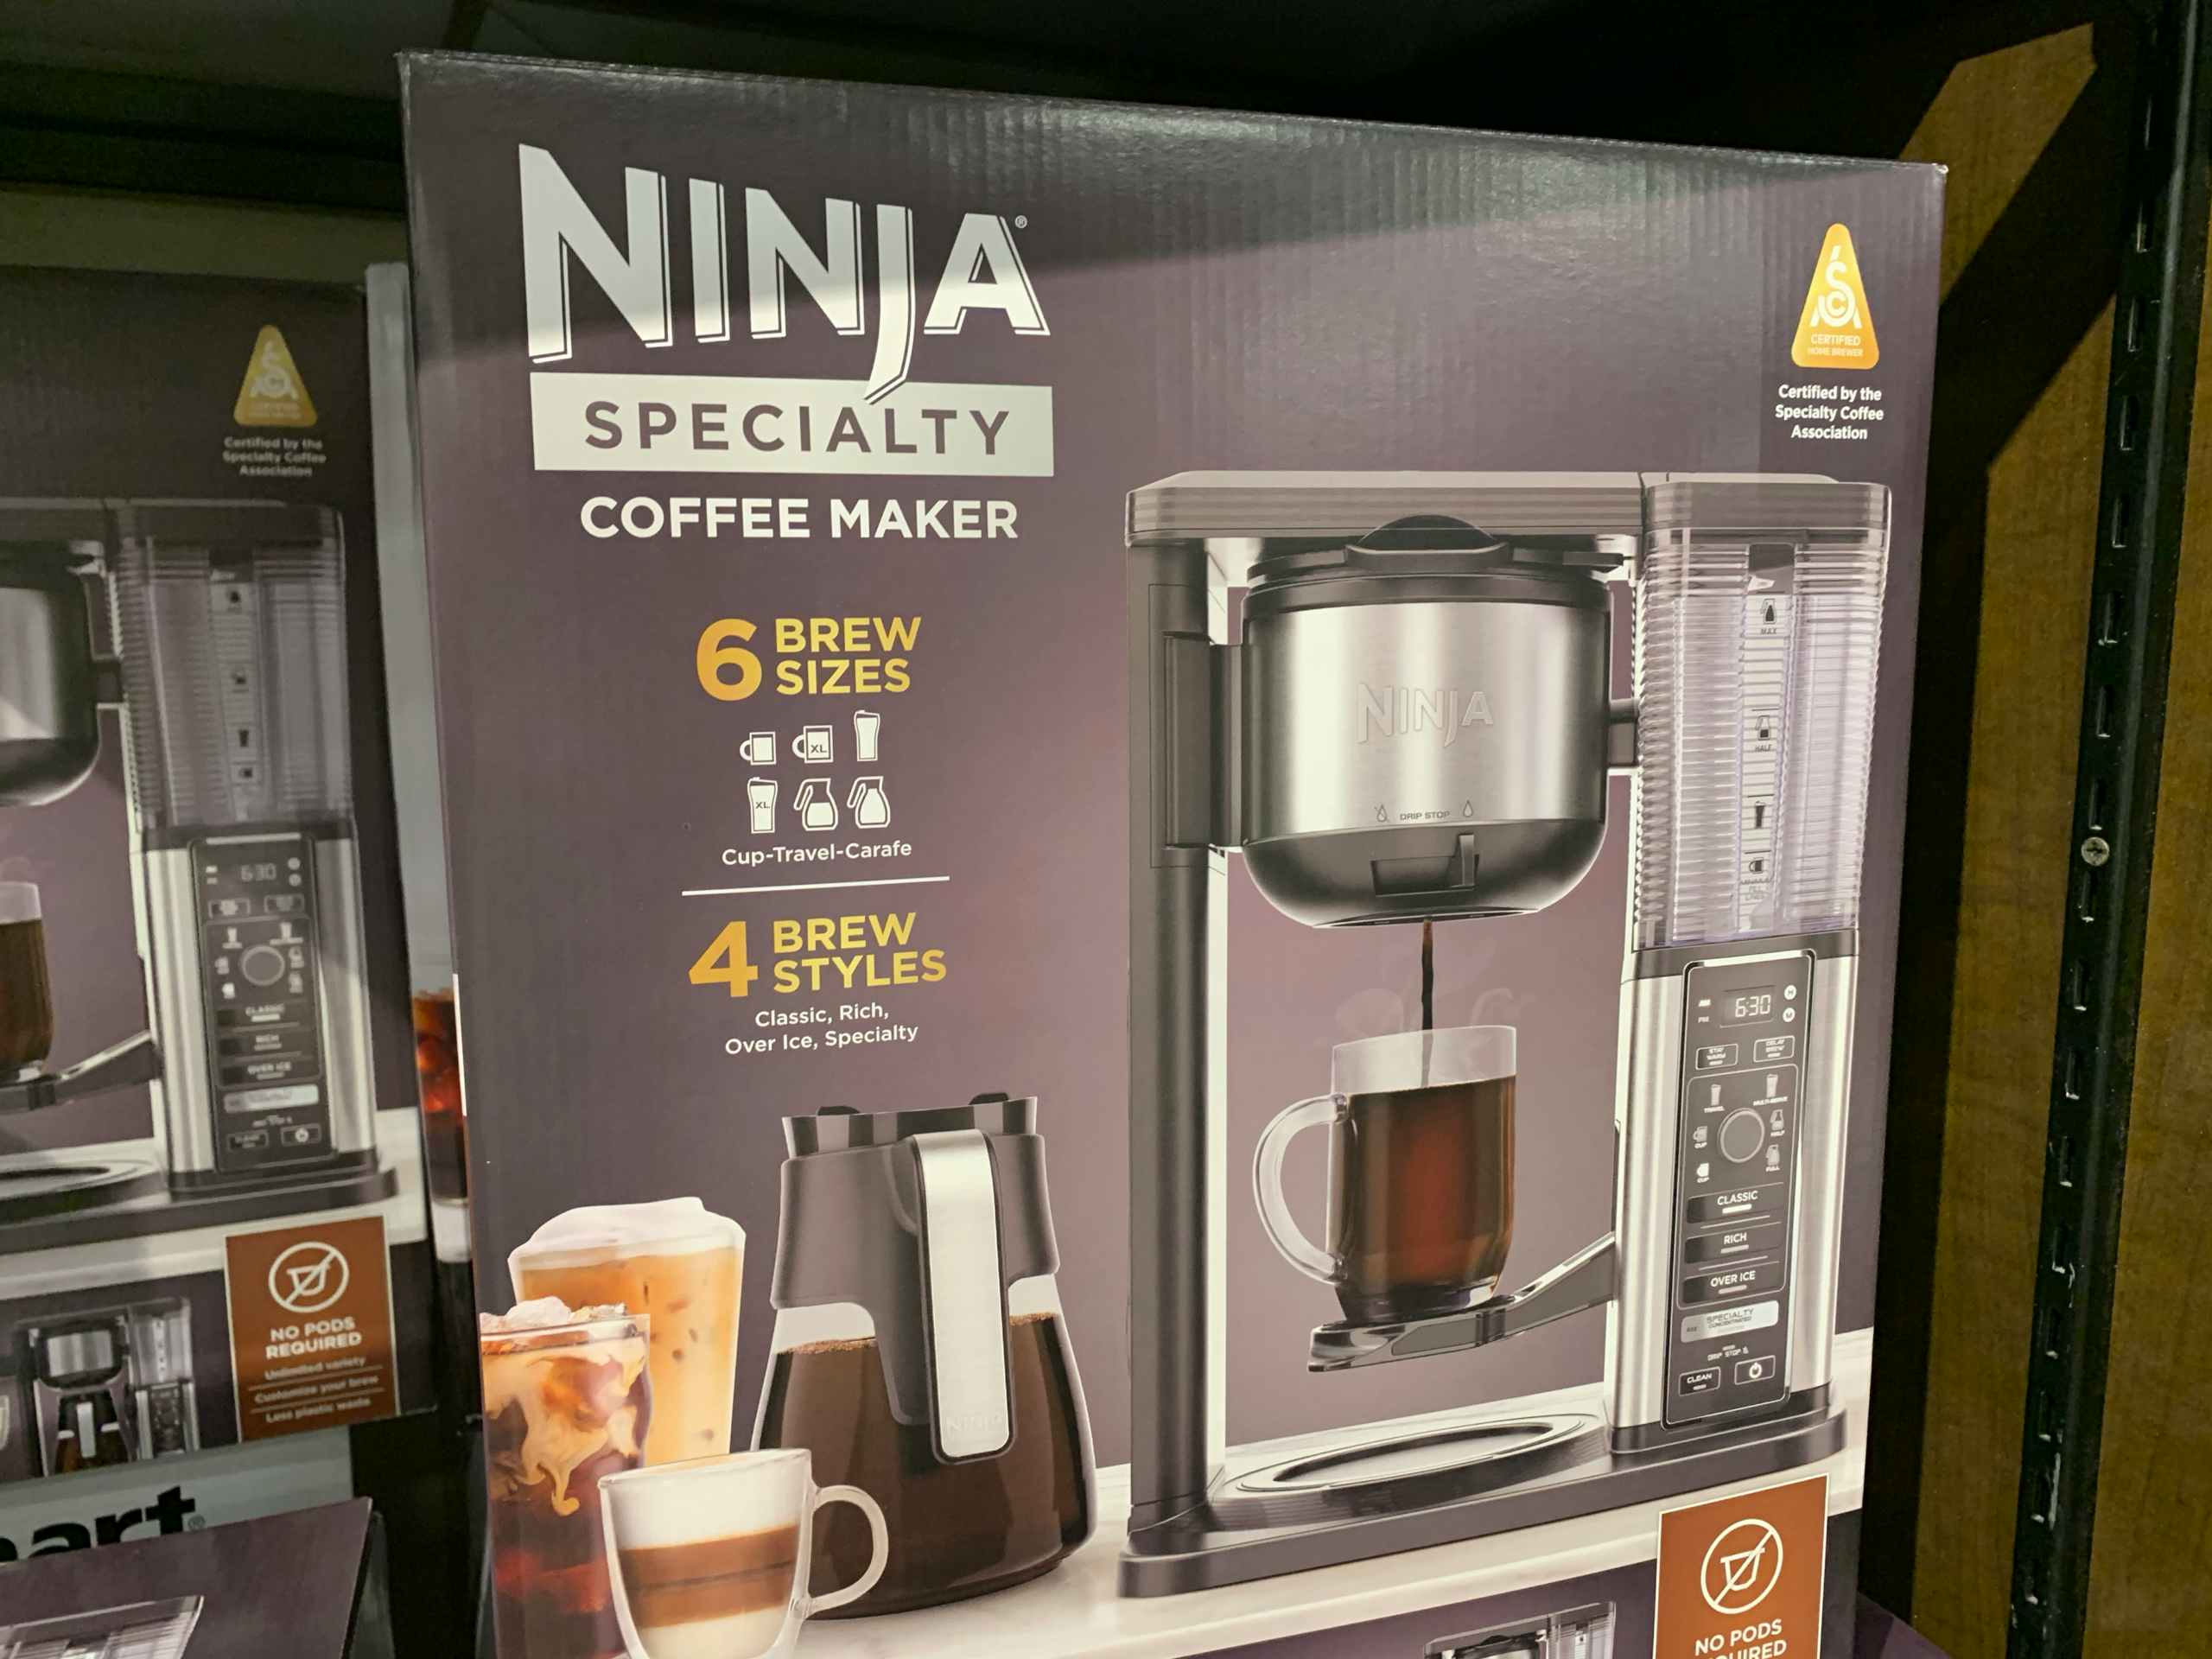 kohls ninja specialty coffee maker in store image 2021